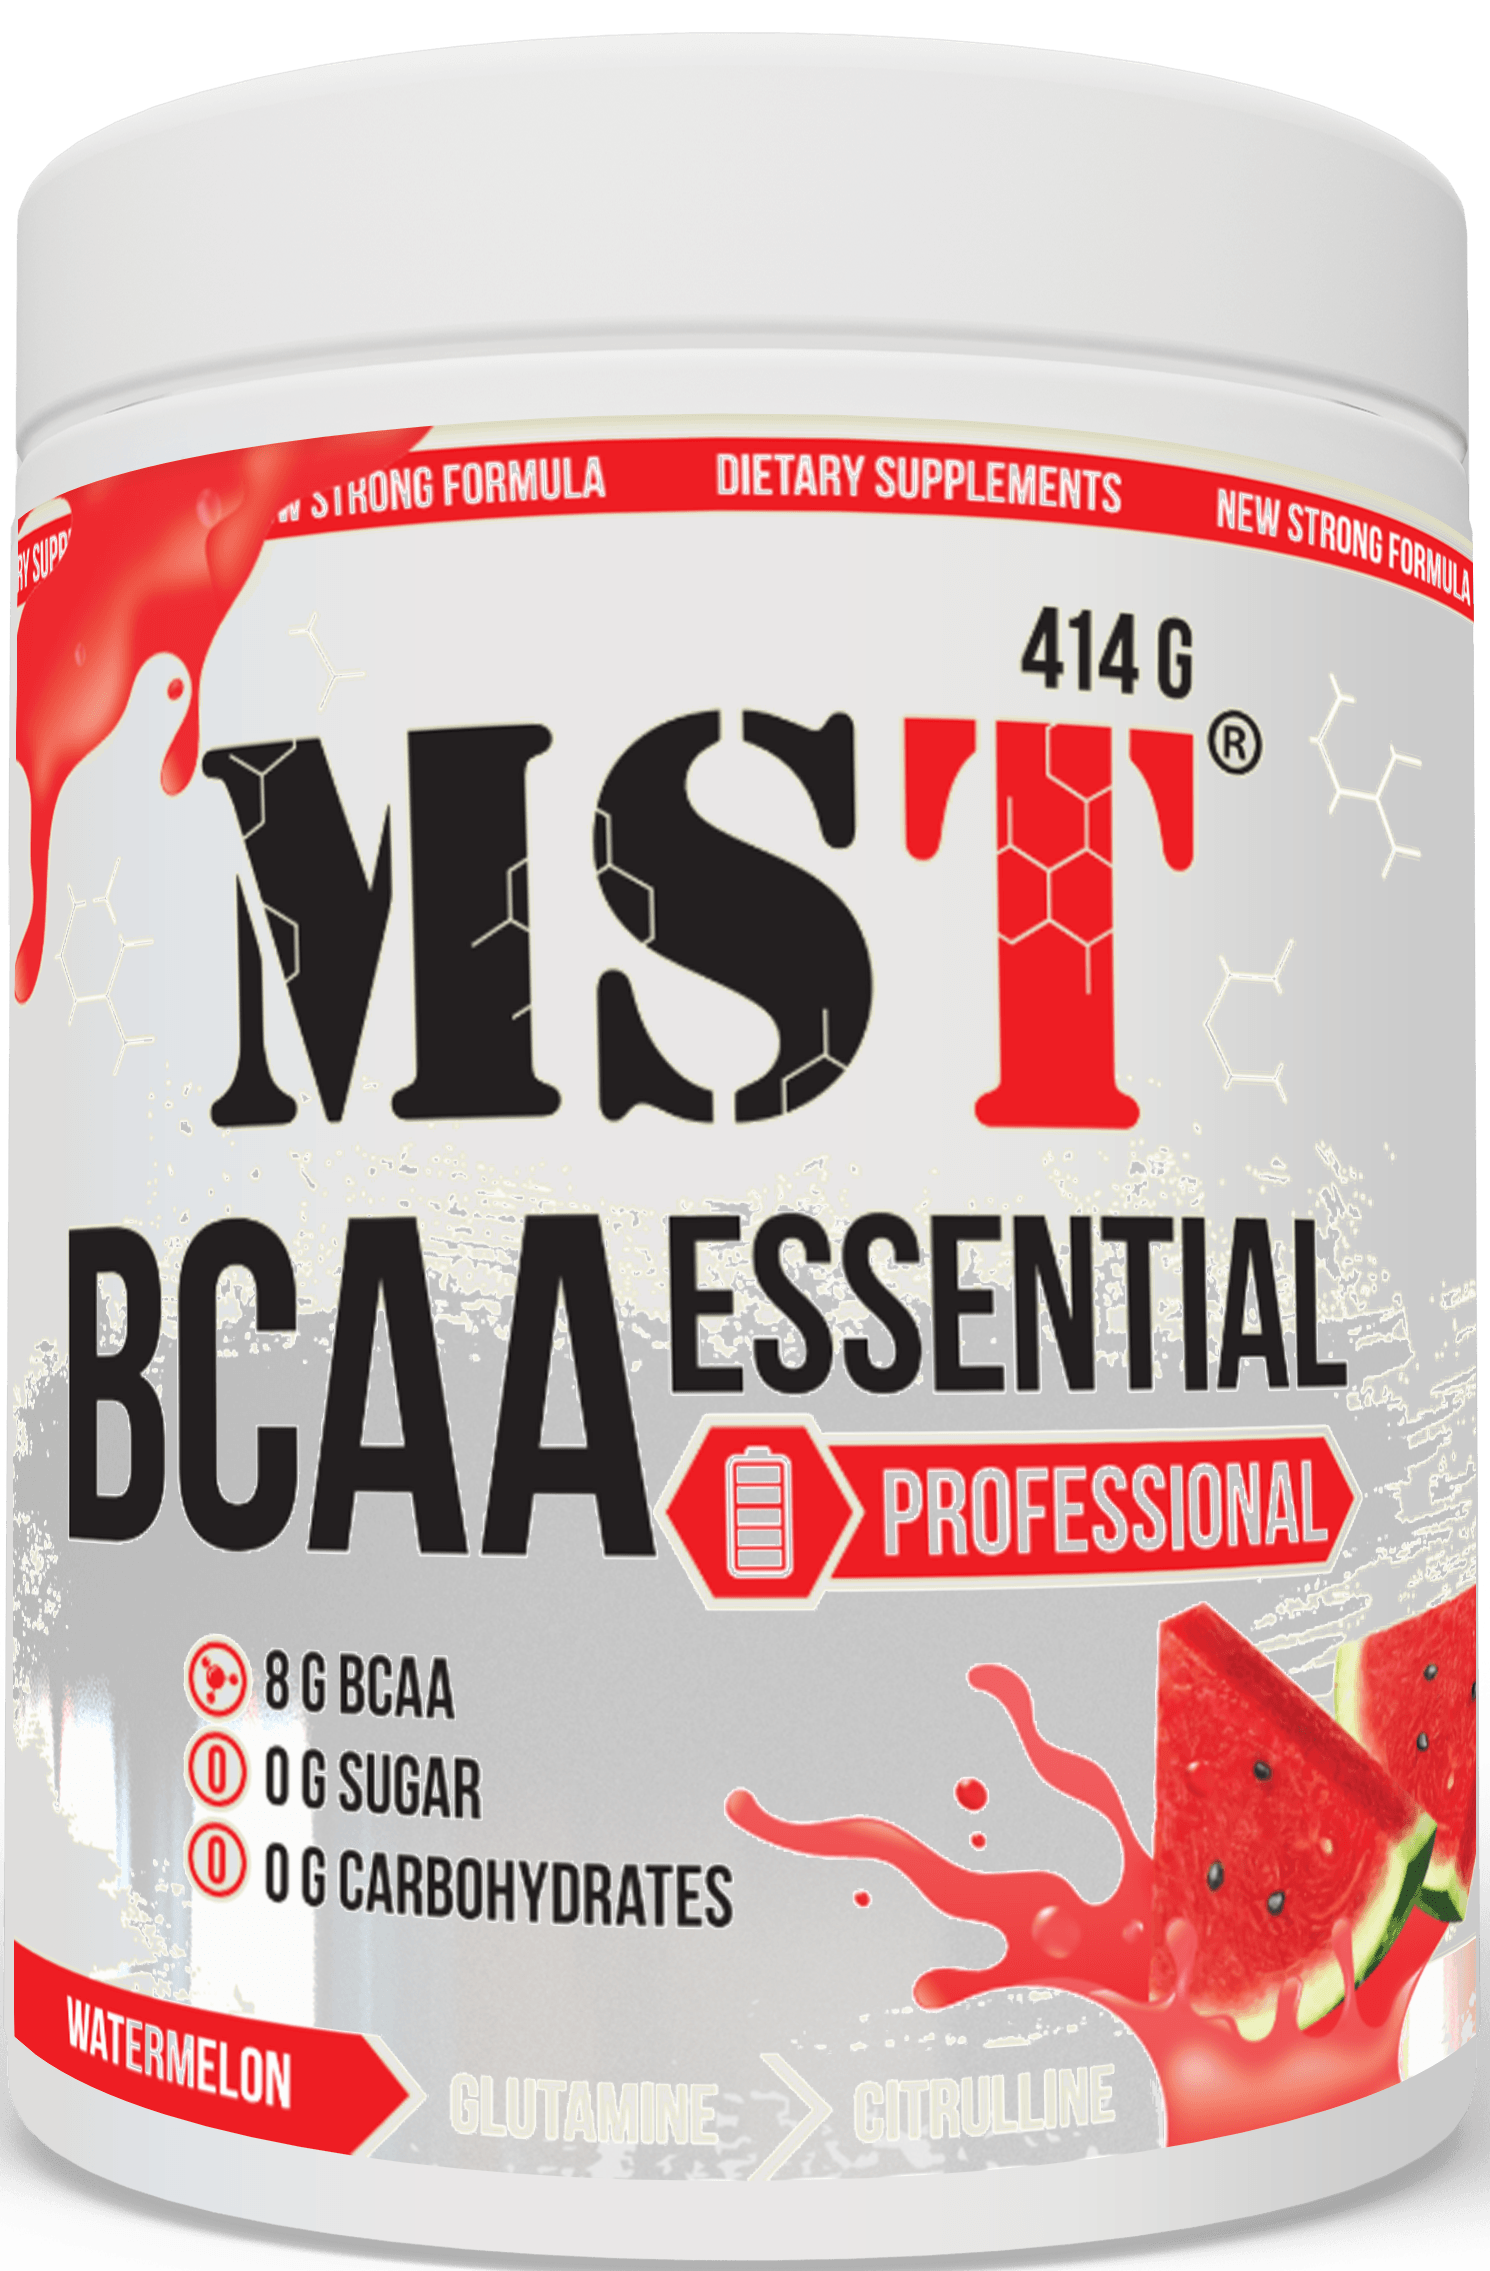 BCAA Essential Professional, 414 g, MST Nutrition. Amino acid complex. 